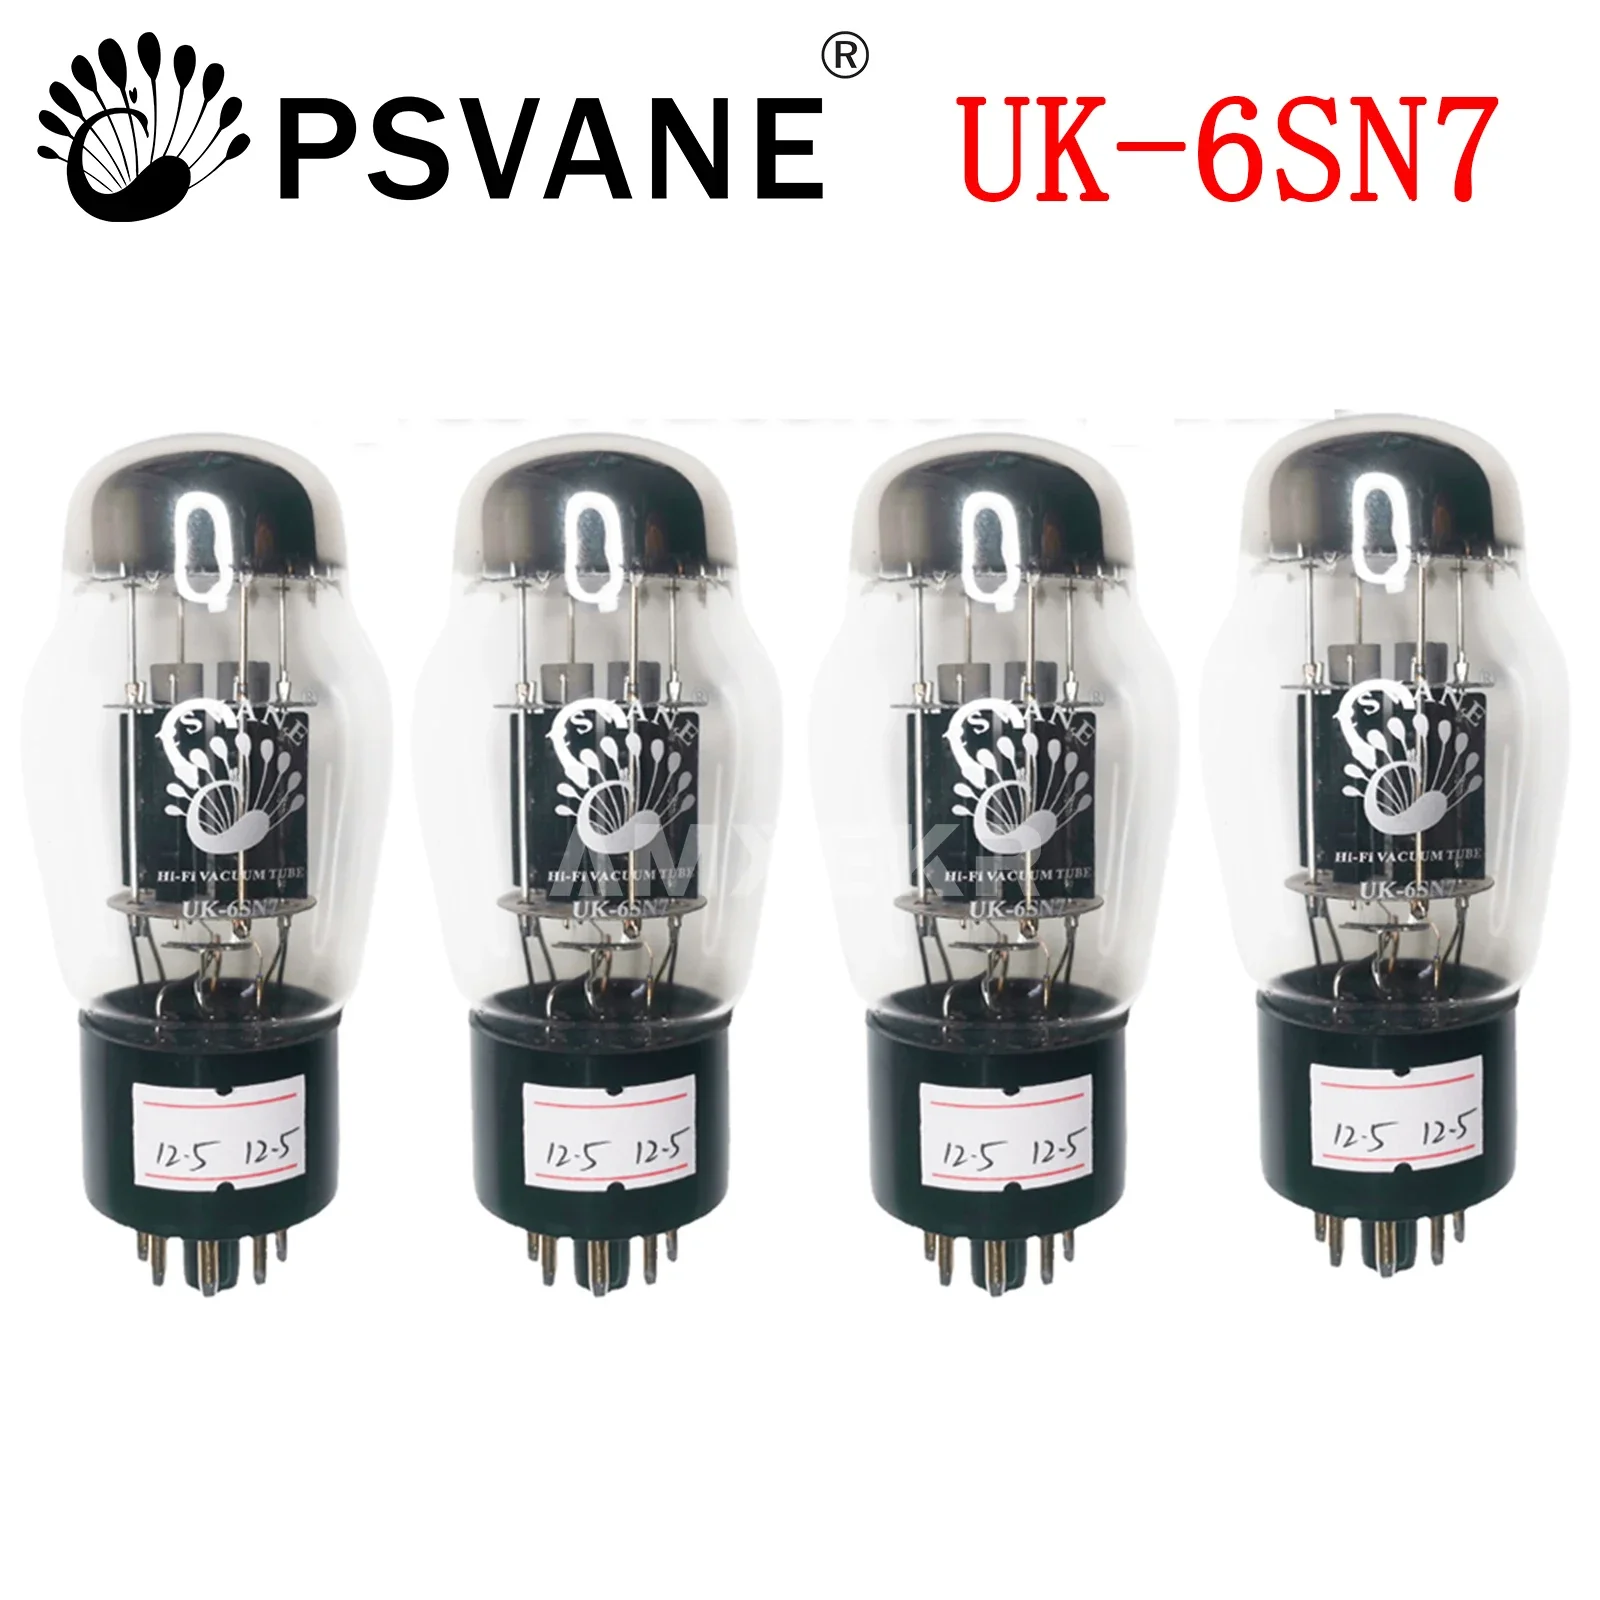 

PSVANE UK-6SN7 Vacuum Tube Upgrade 6SN7 6N8P 6H8C CV181 Electronic Precision Matching Amplifier High Fidelity Matched Quad